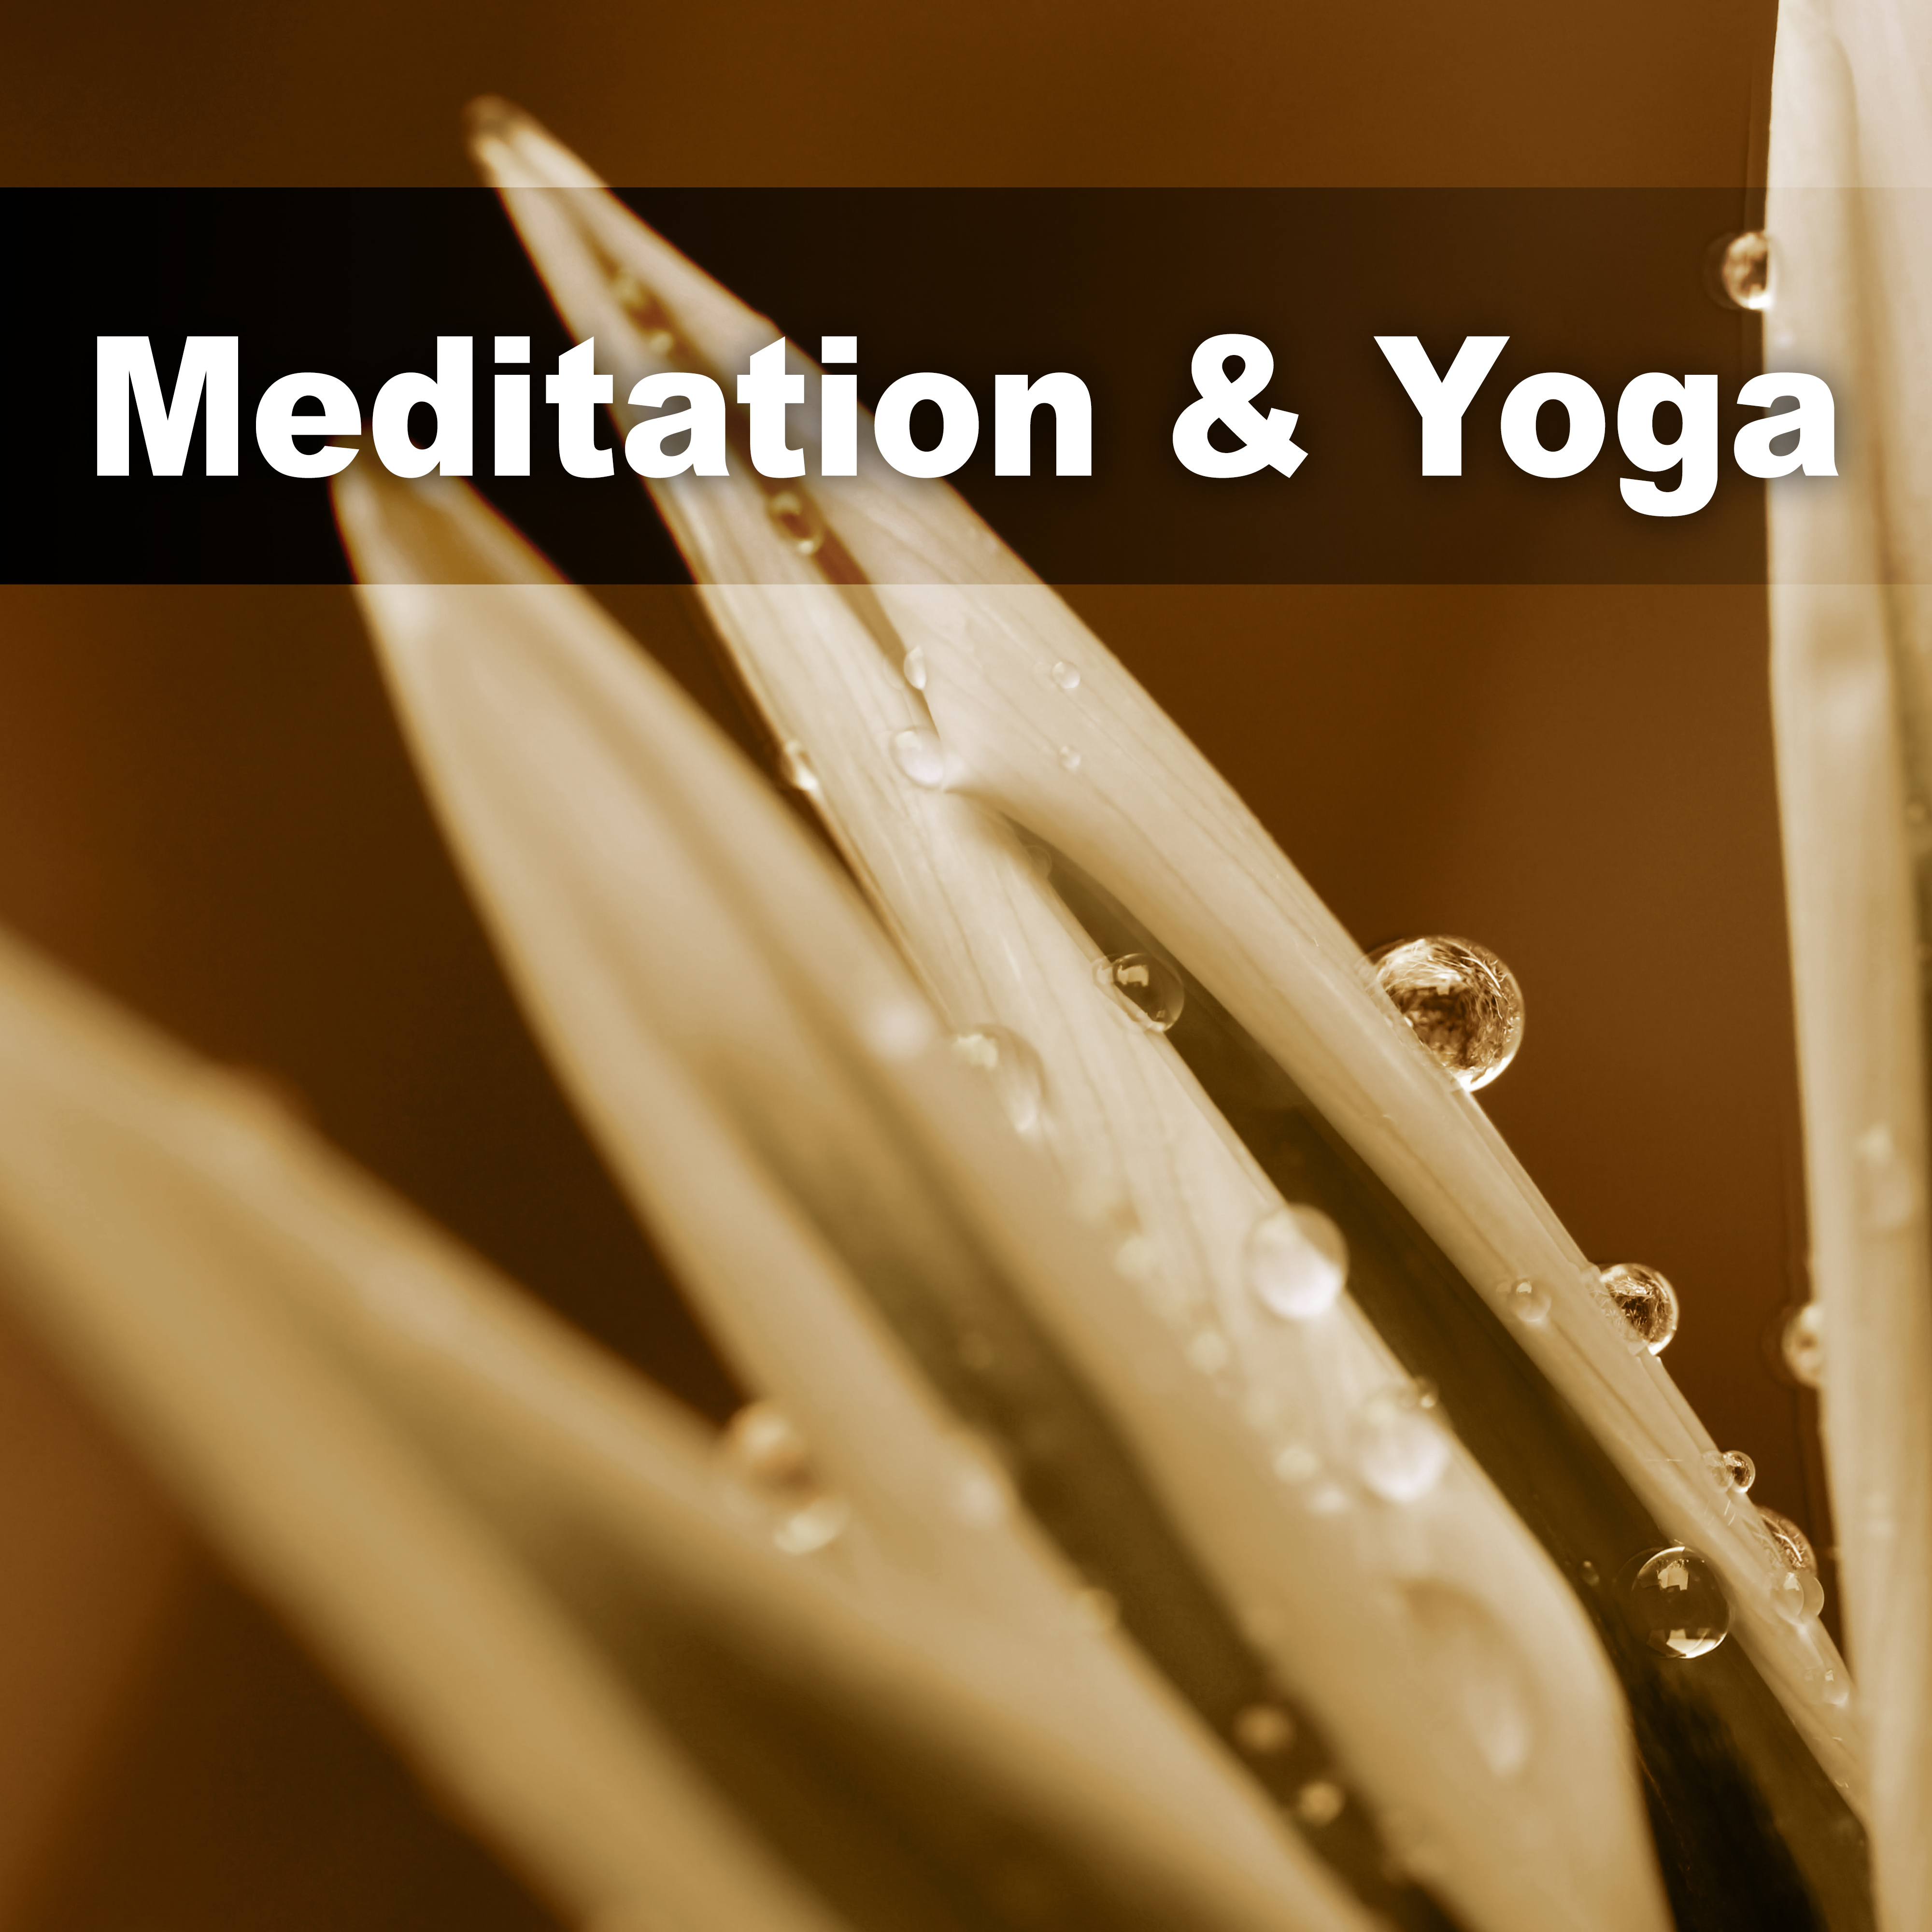 Meditation & Yoga – Massage Music, Reiki, Harmony Yoga, Relaxation Songs